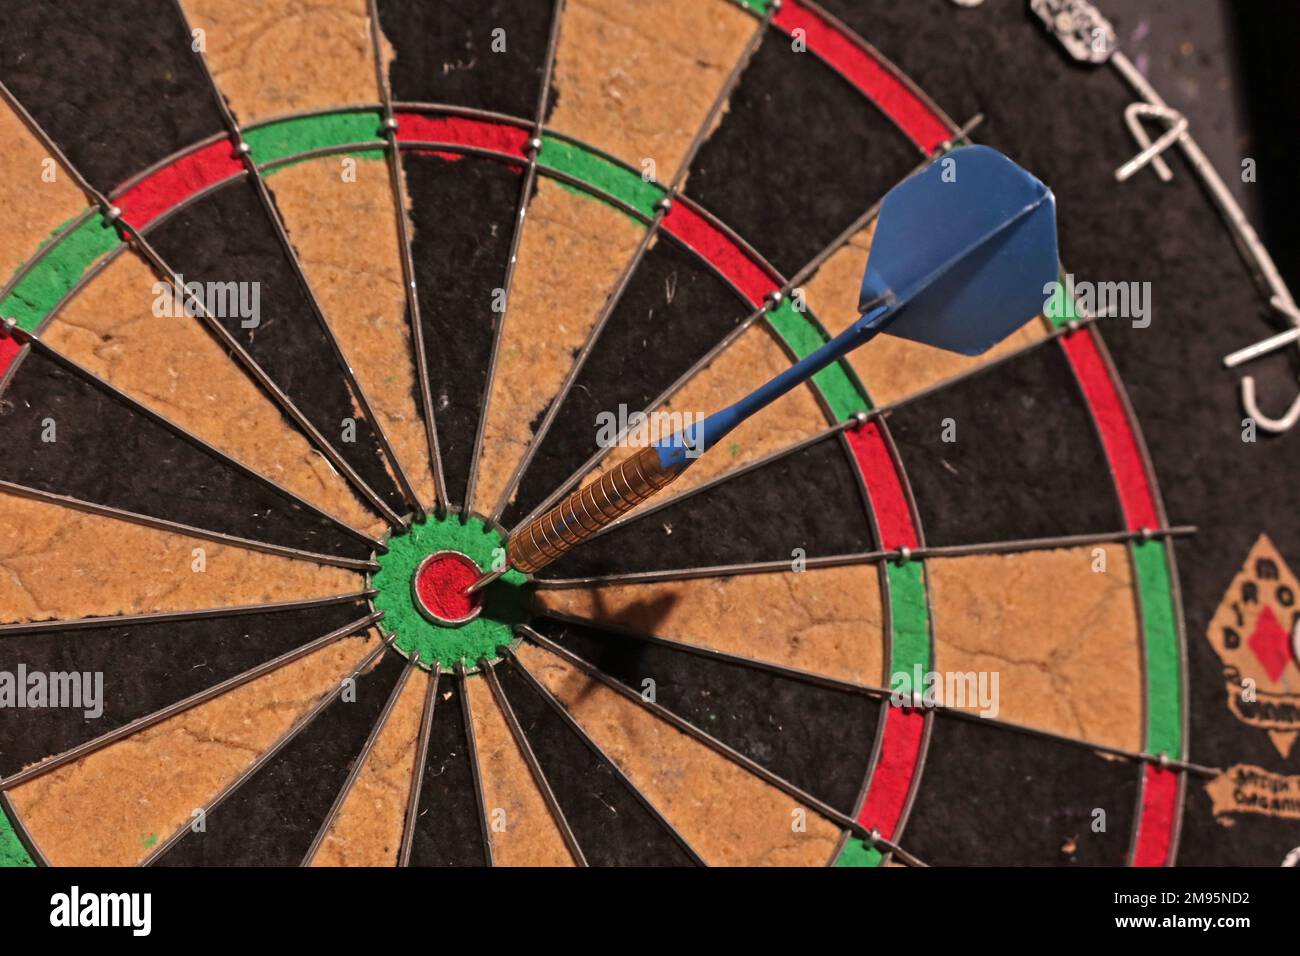 Winmau Diamond Pub dartboard, blue dart scores 50 in the bullseye Stock Photo